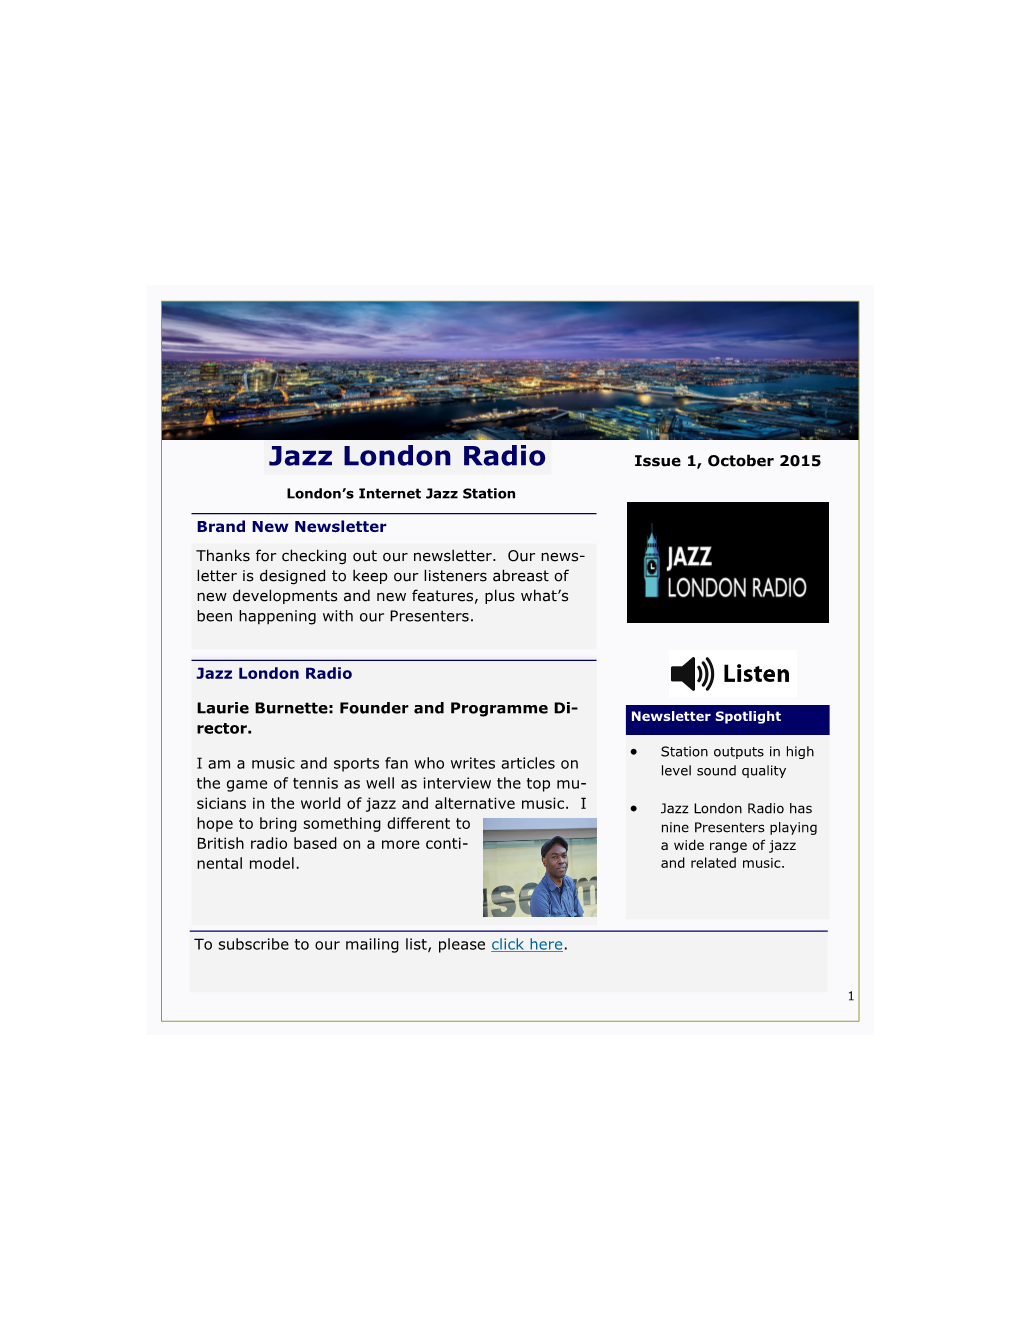 Jazz London Radio Newsletter